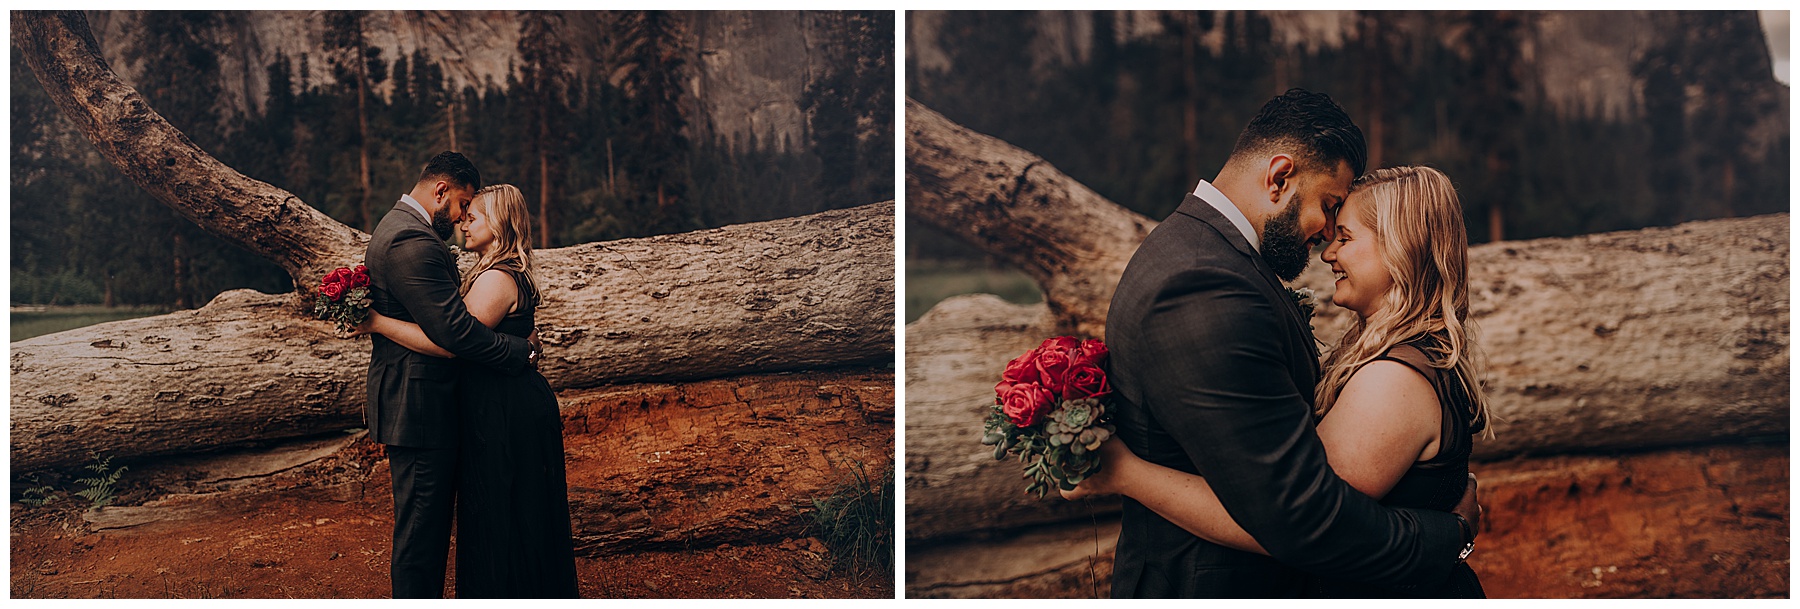 Sadie and Kiran’s Yosemite Park Engagement -Juju Photography